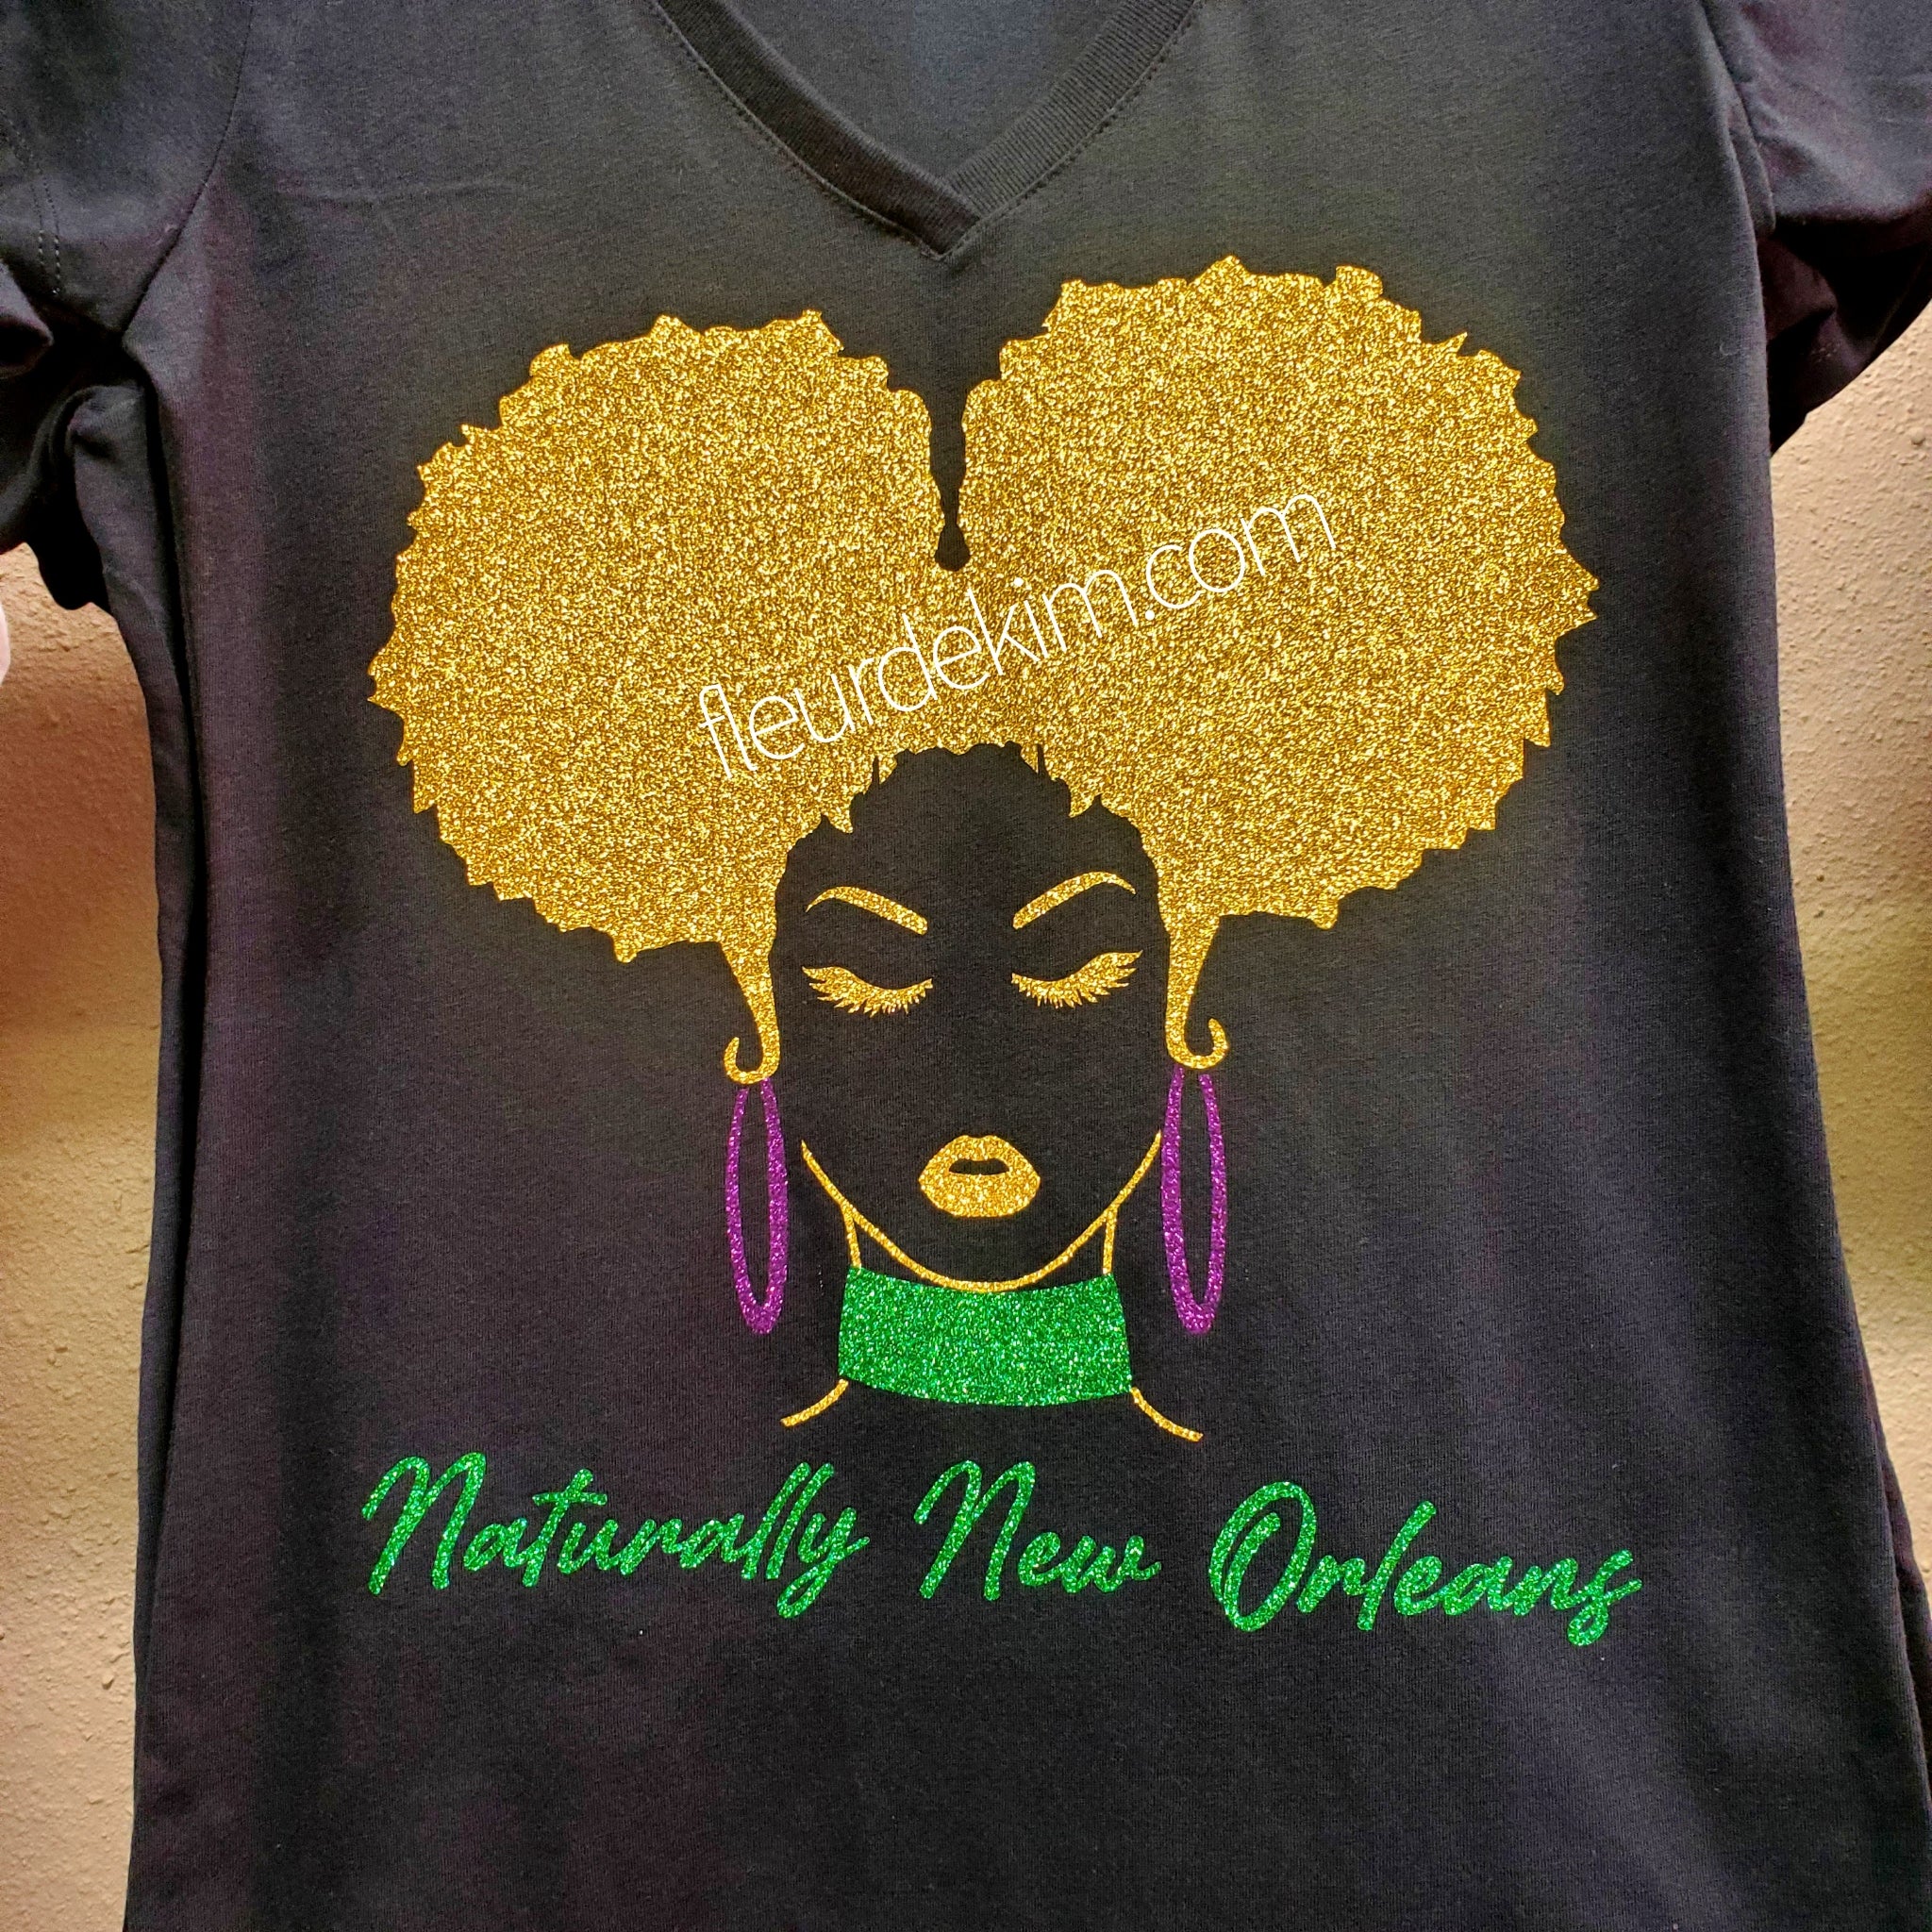 *Mardi Gras Naturally New Orleans tshirt